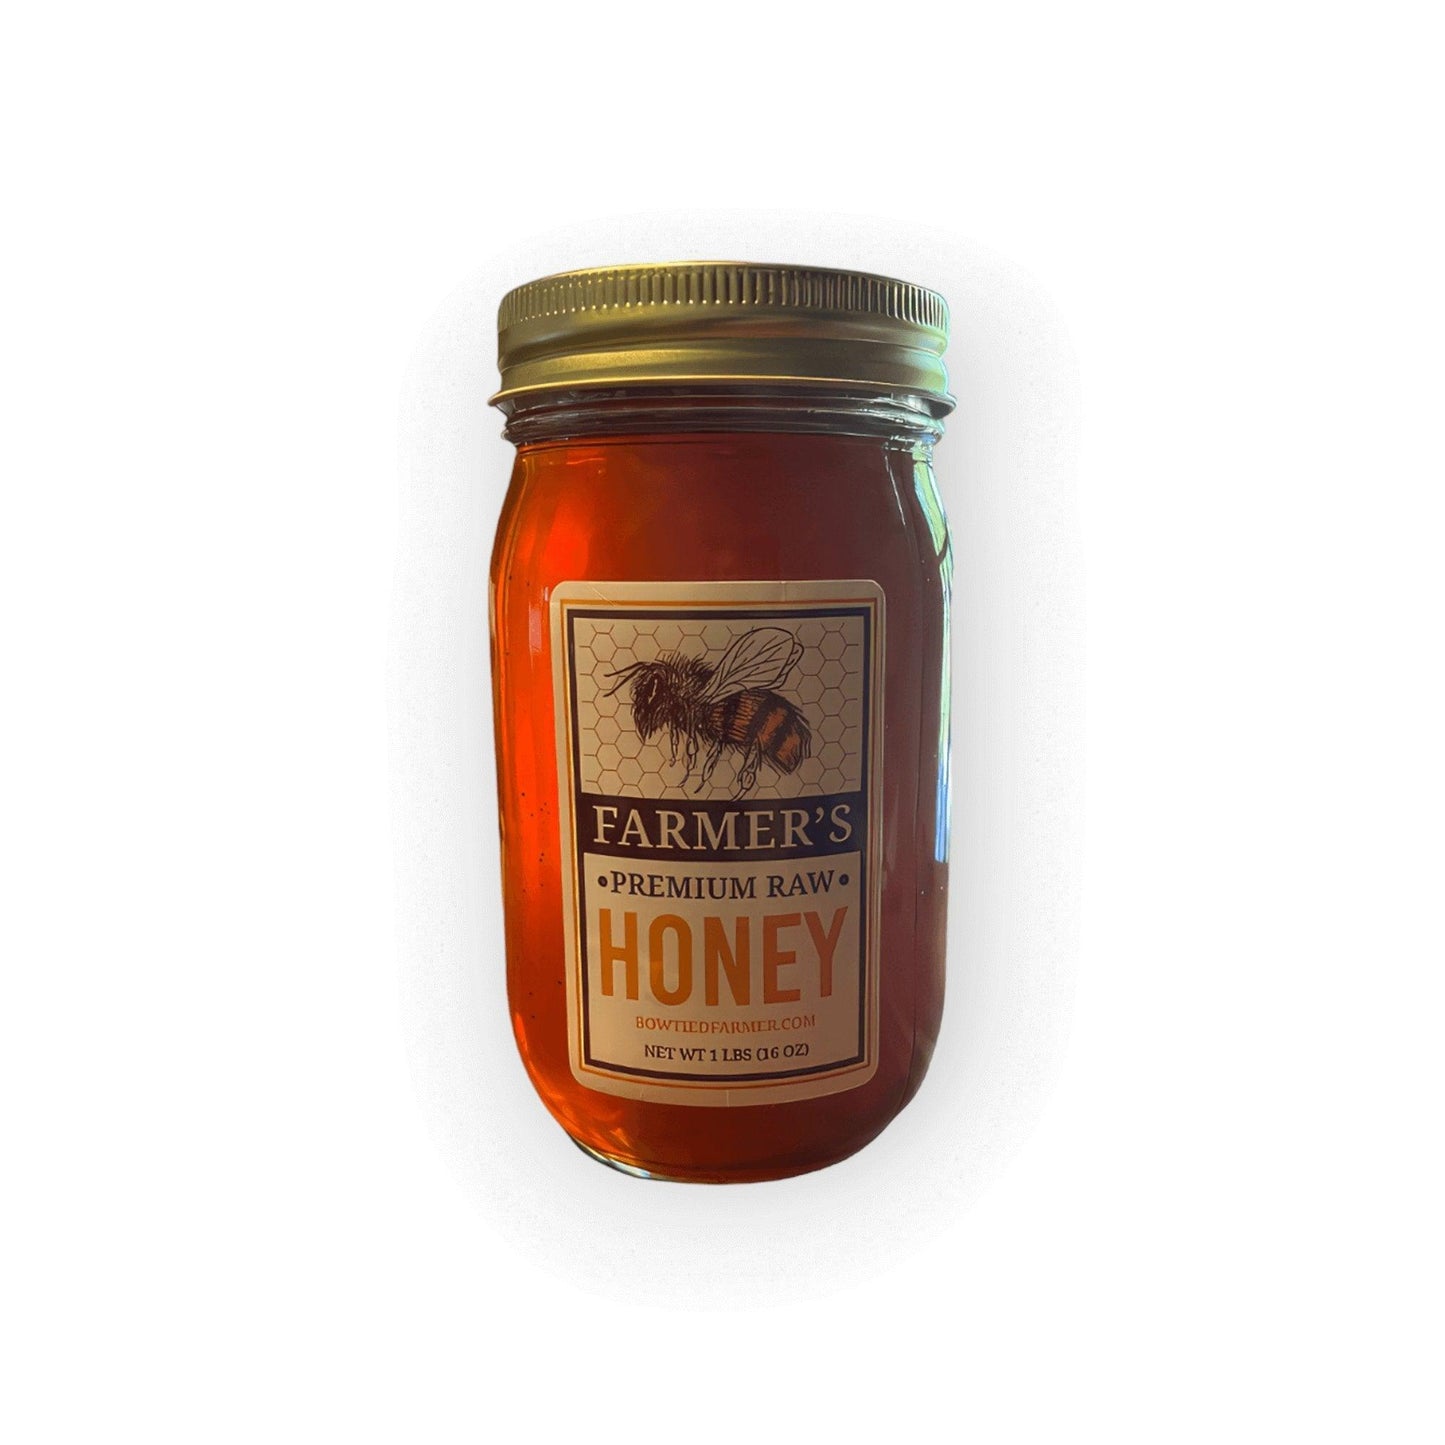 Farmer's Premium Raw Honey - Pint Glass Jar (1 LB) - Bowtied Farmer